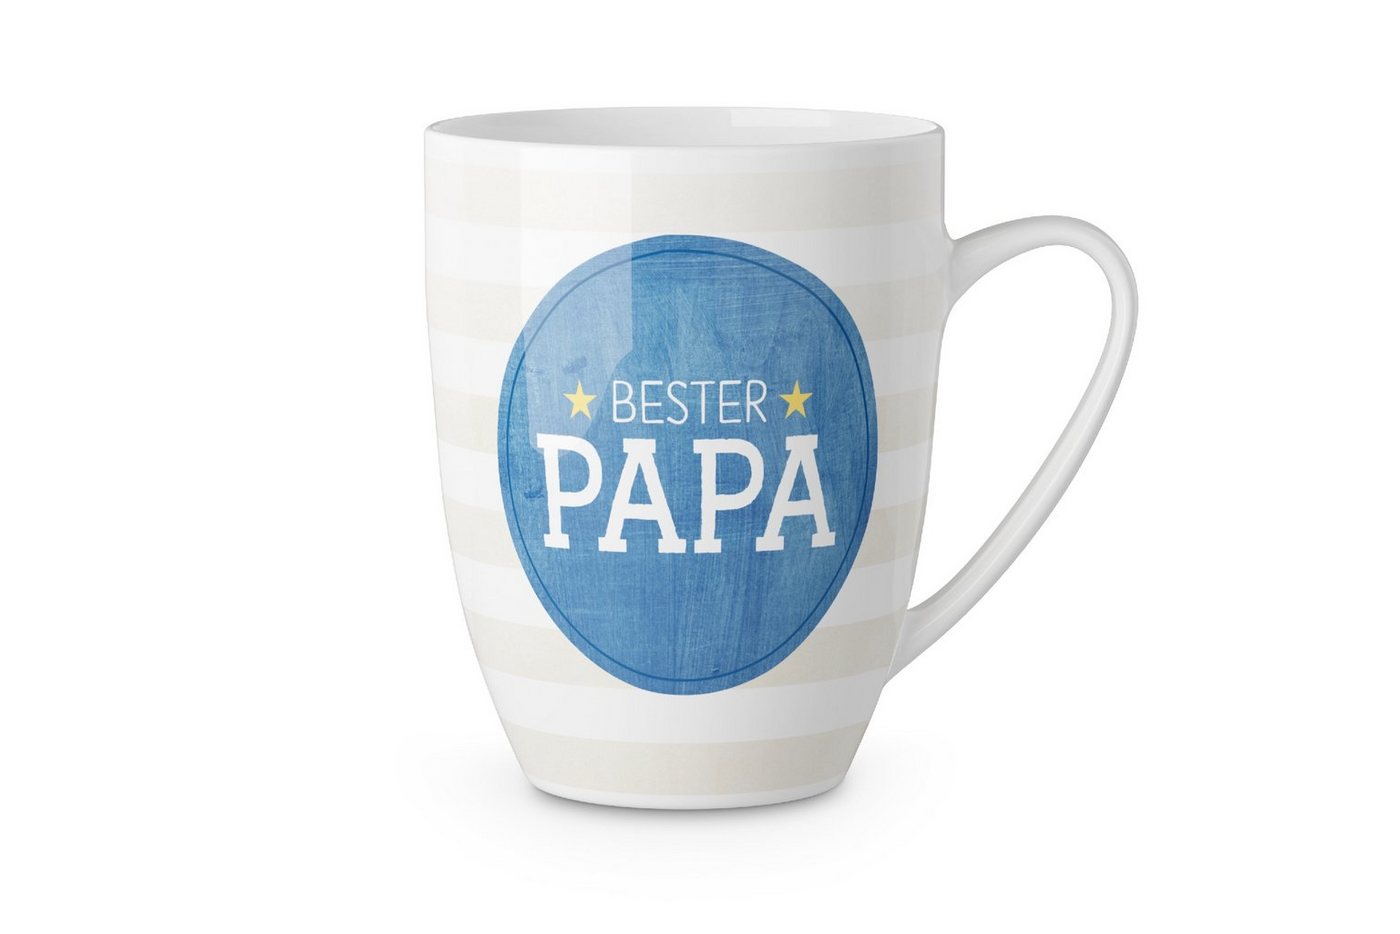 La Vida Tasse Kaffeetasse Kaffeebecher Tee Tasse Becher für dich la vida Mama Papa, Material: Keramik von La Vida